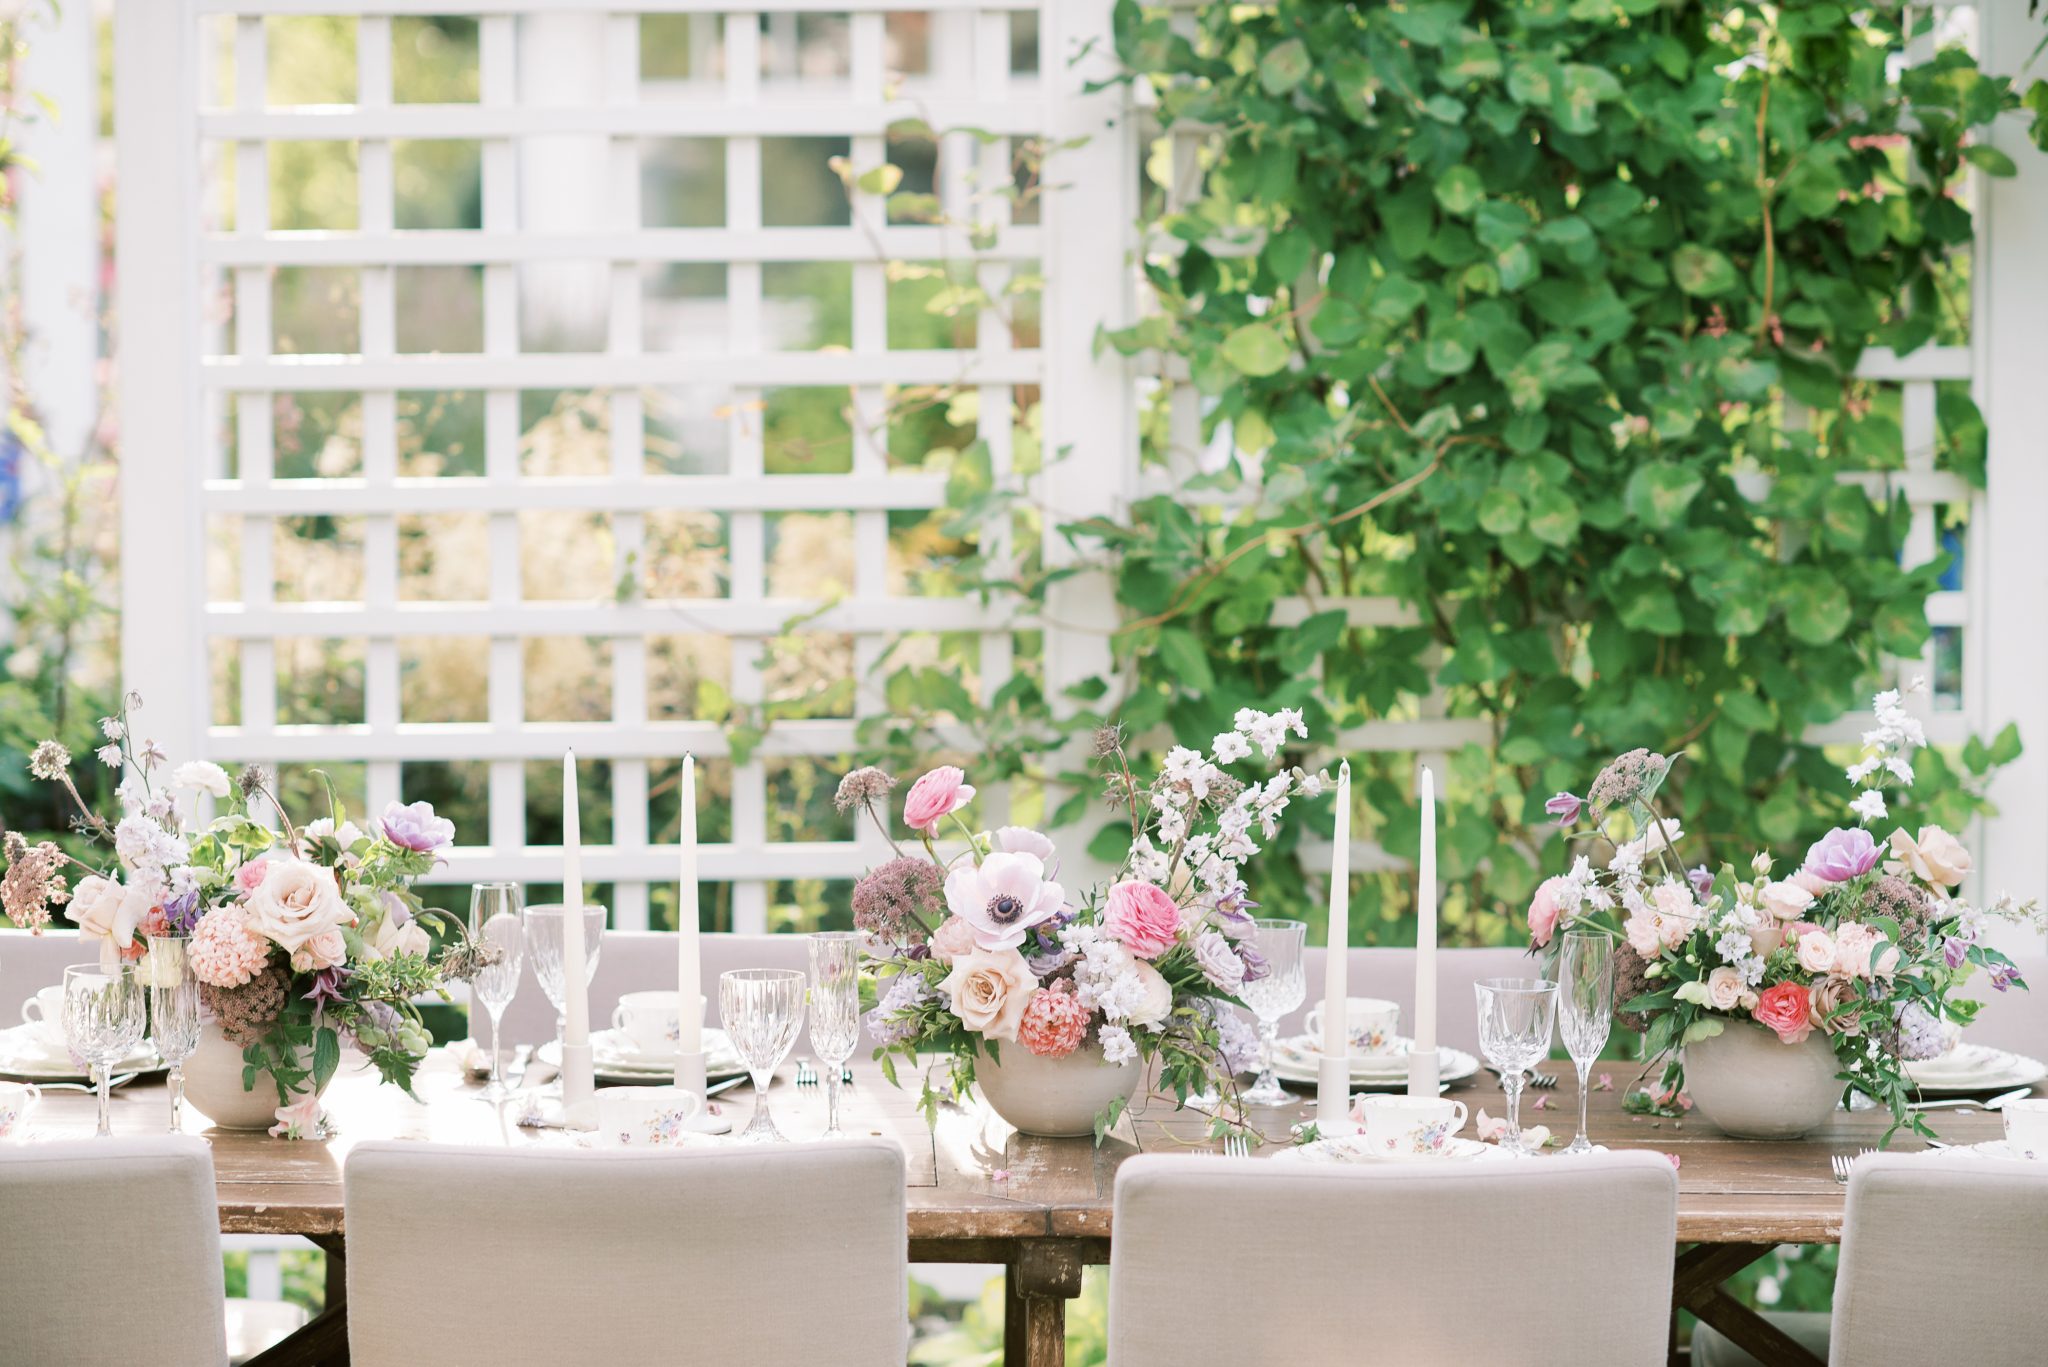 Gardenesque Tablescape in the Deane House Garden - wedding inspiration featured on Bronte Bride